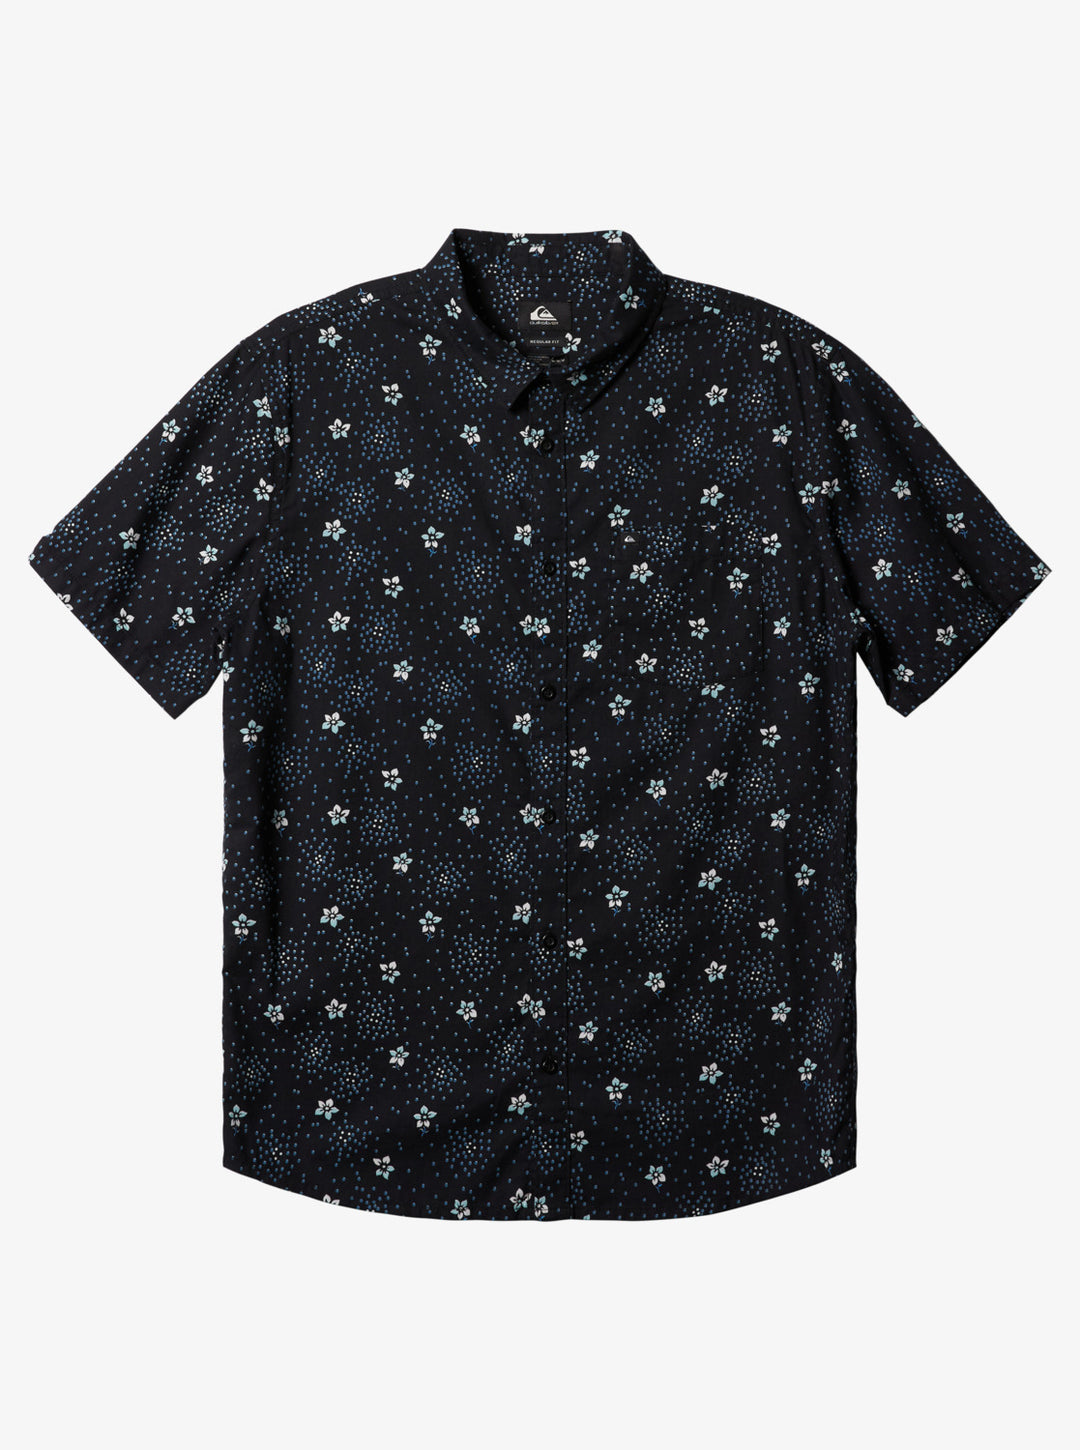 Quiksilver Summer Petals Short Sleeve Shirt - Black - Sun Diego Boardshop